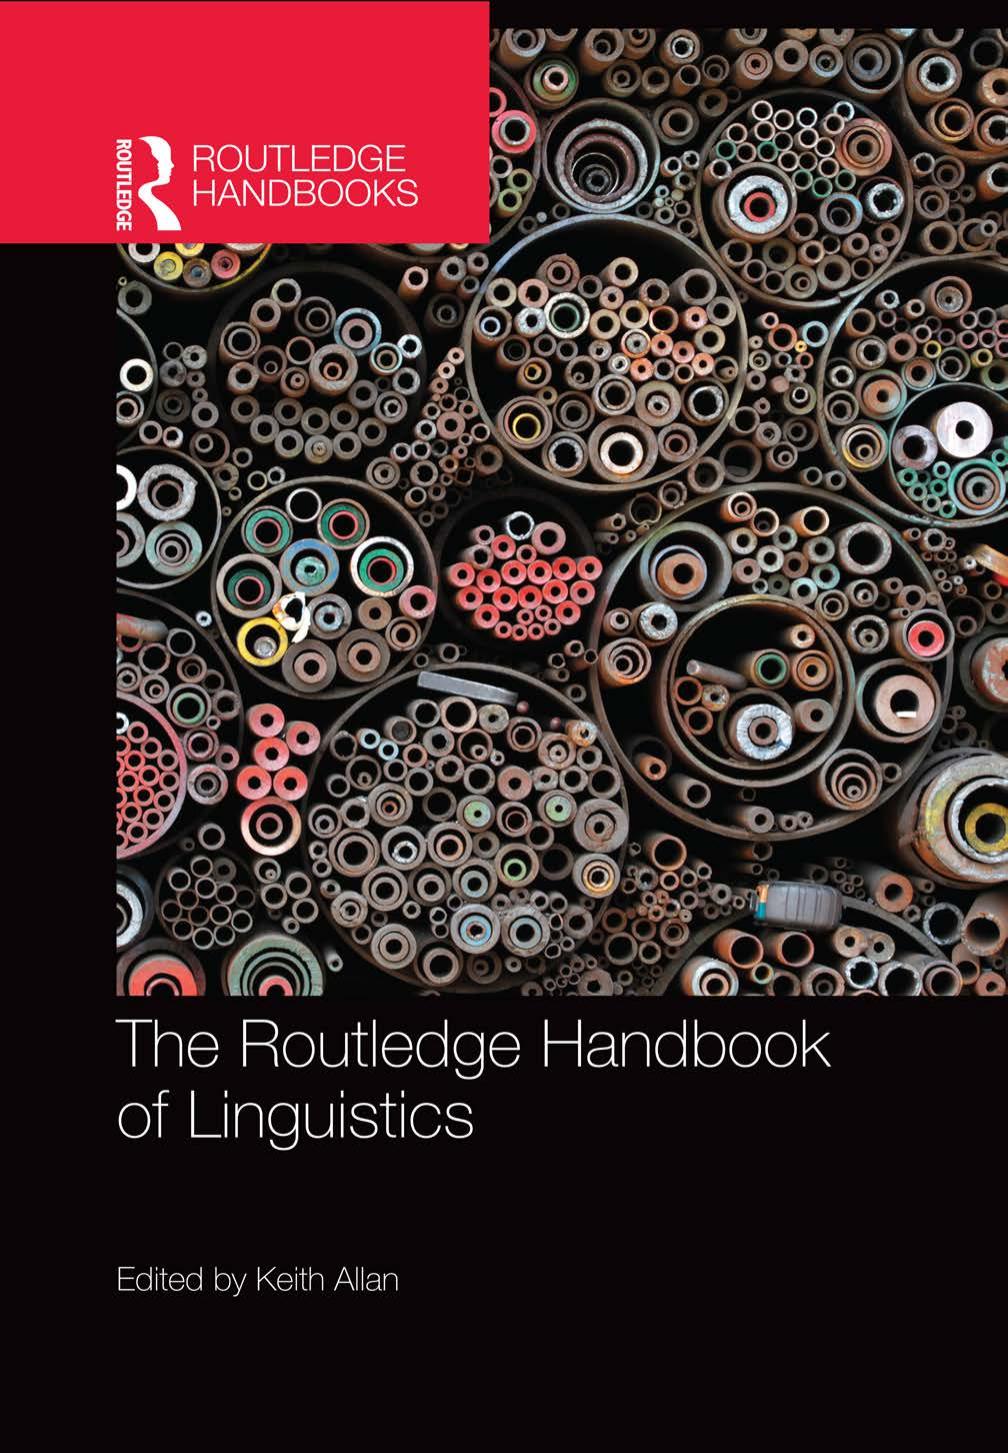 The Routledge handbook of linguistics